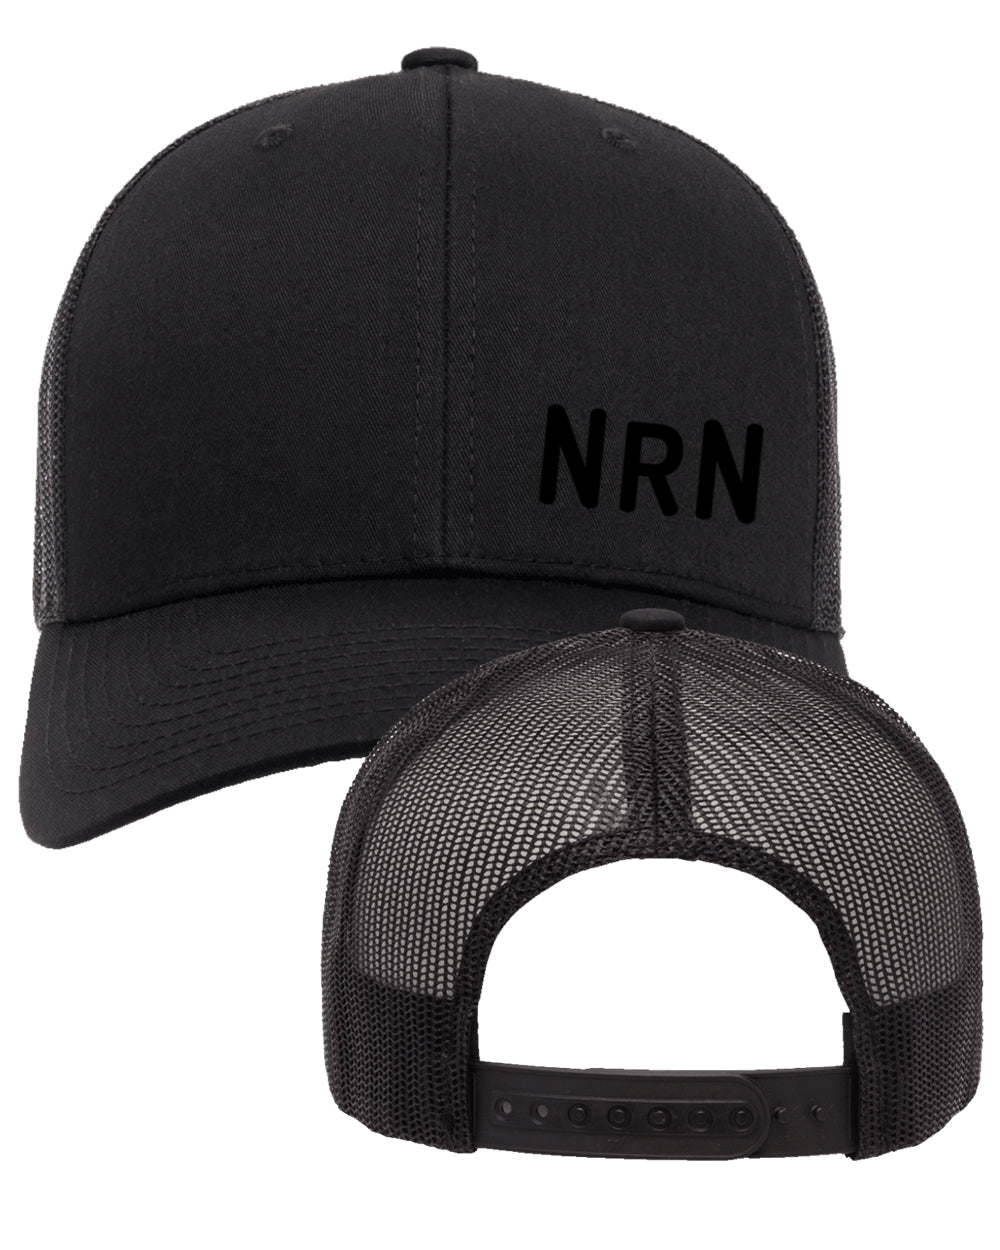 NRN Mesh Black on Black Snapback